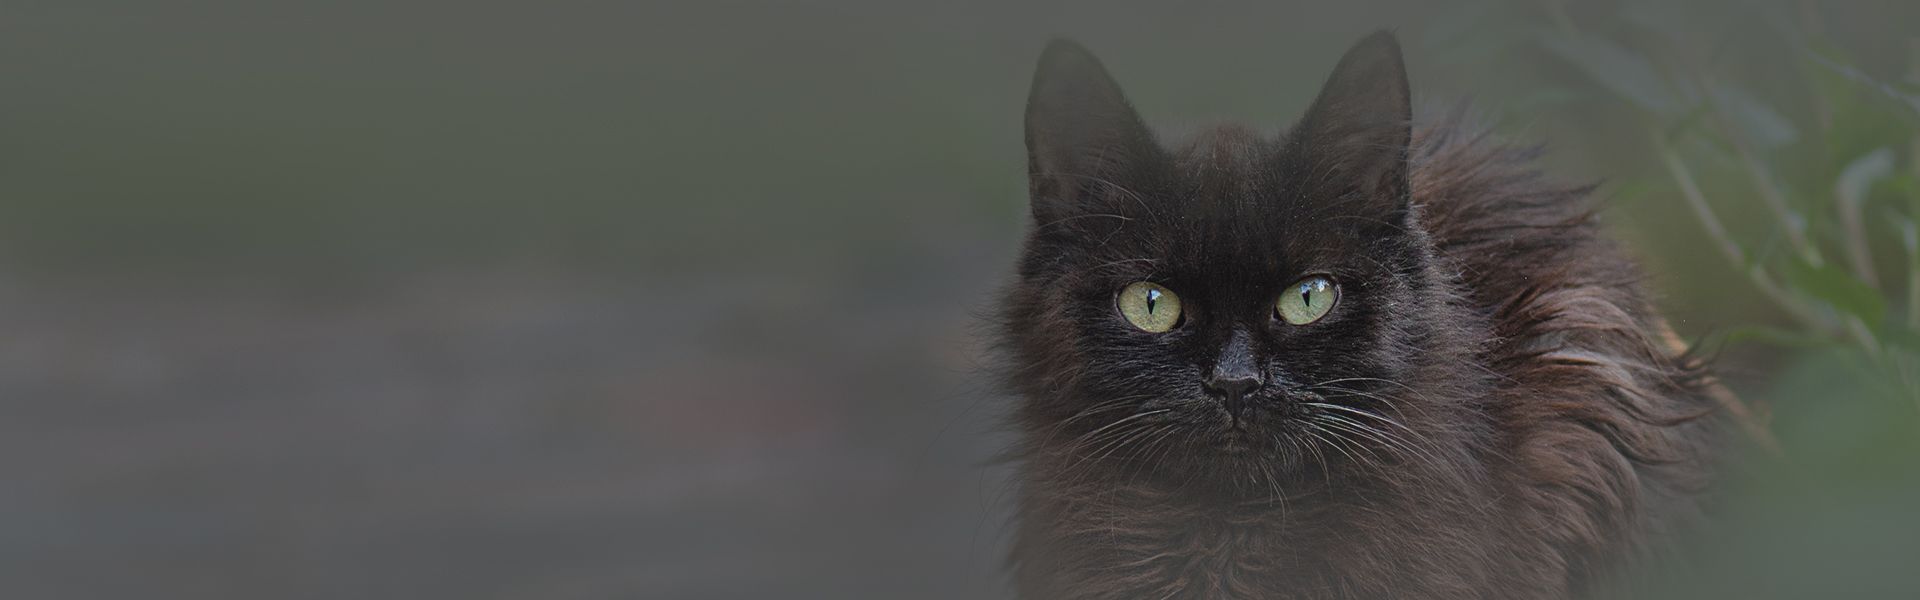 black furry cat on green grass